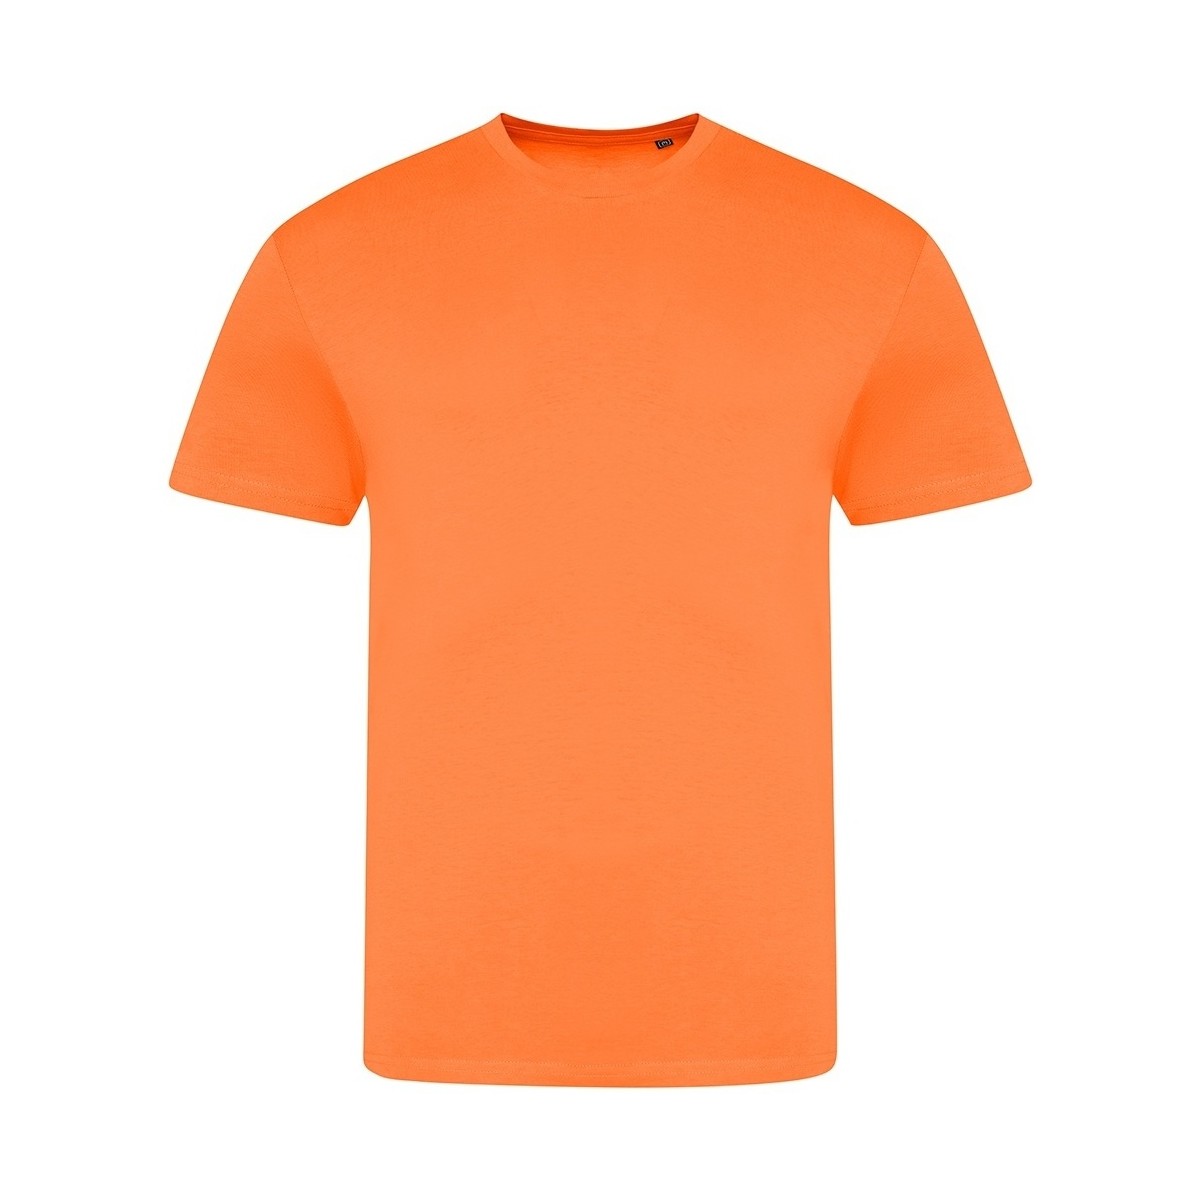 Vêtements T-shirts manches longues Awdis Electric Tri-Blend Orange